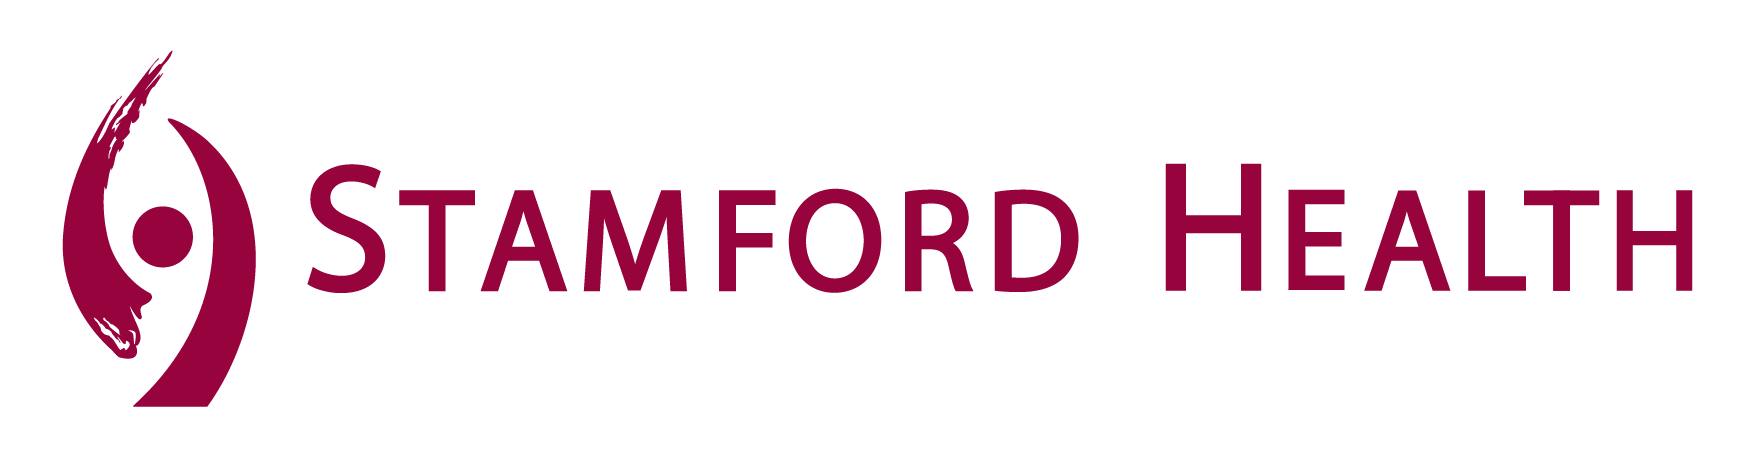 Stamford Health Logo New